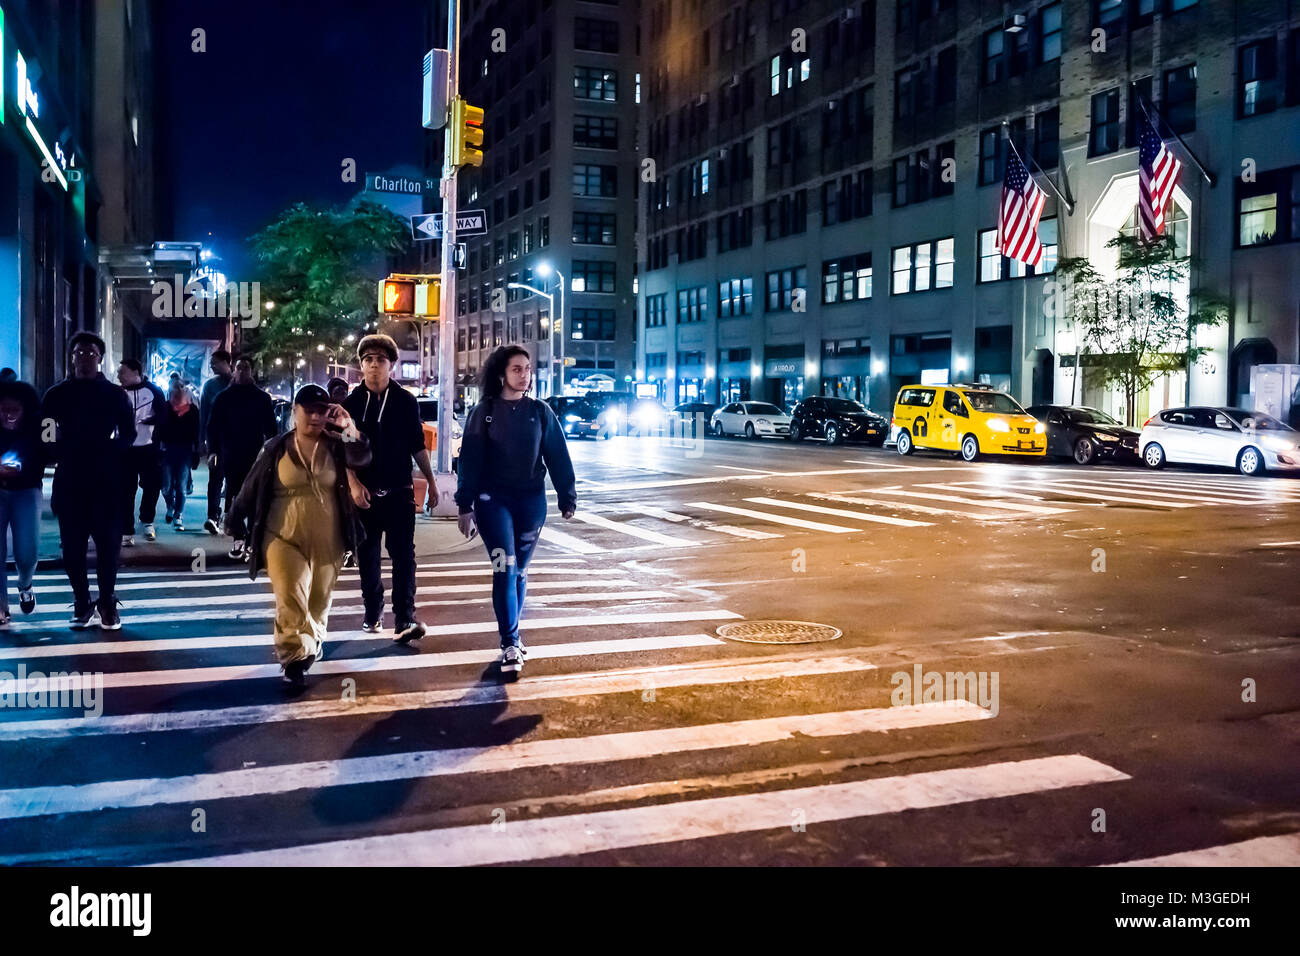 New York City, USA - October 28, 2017: NYC downtown dark evening night illuminated Charlton street road with traffic cars, people crossing sidewalk in Stock Photo